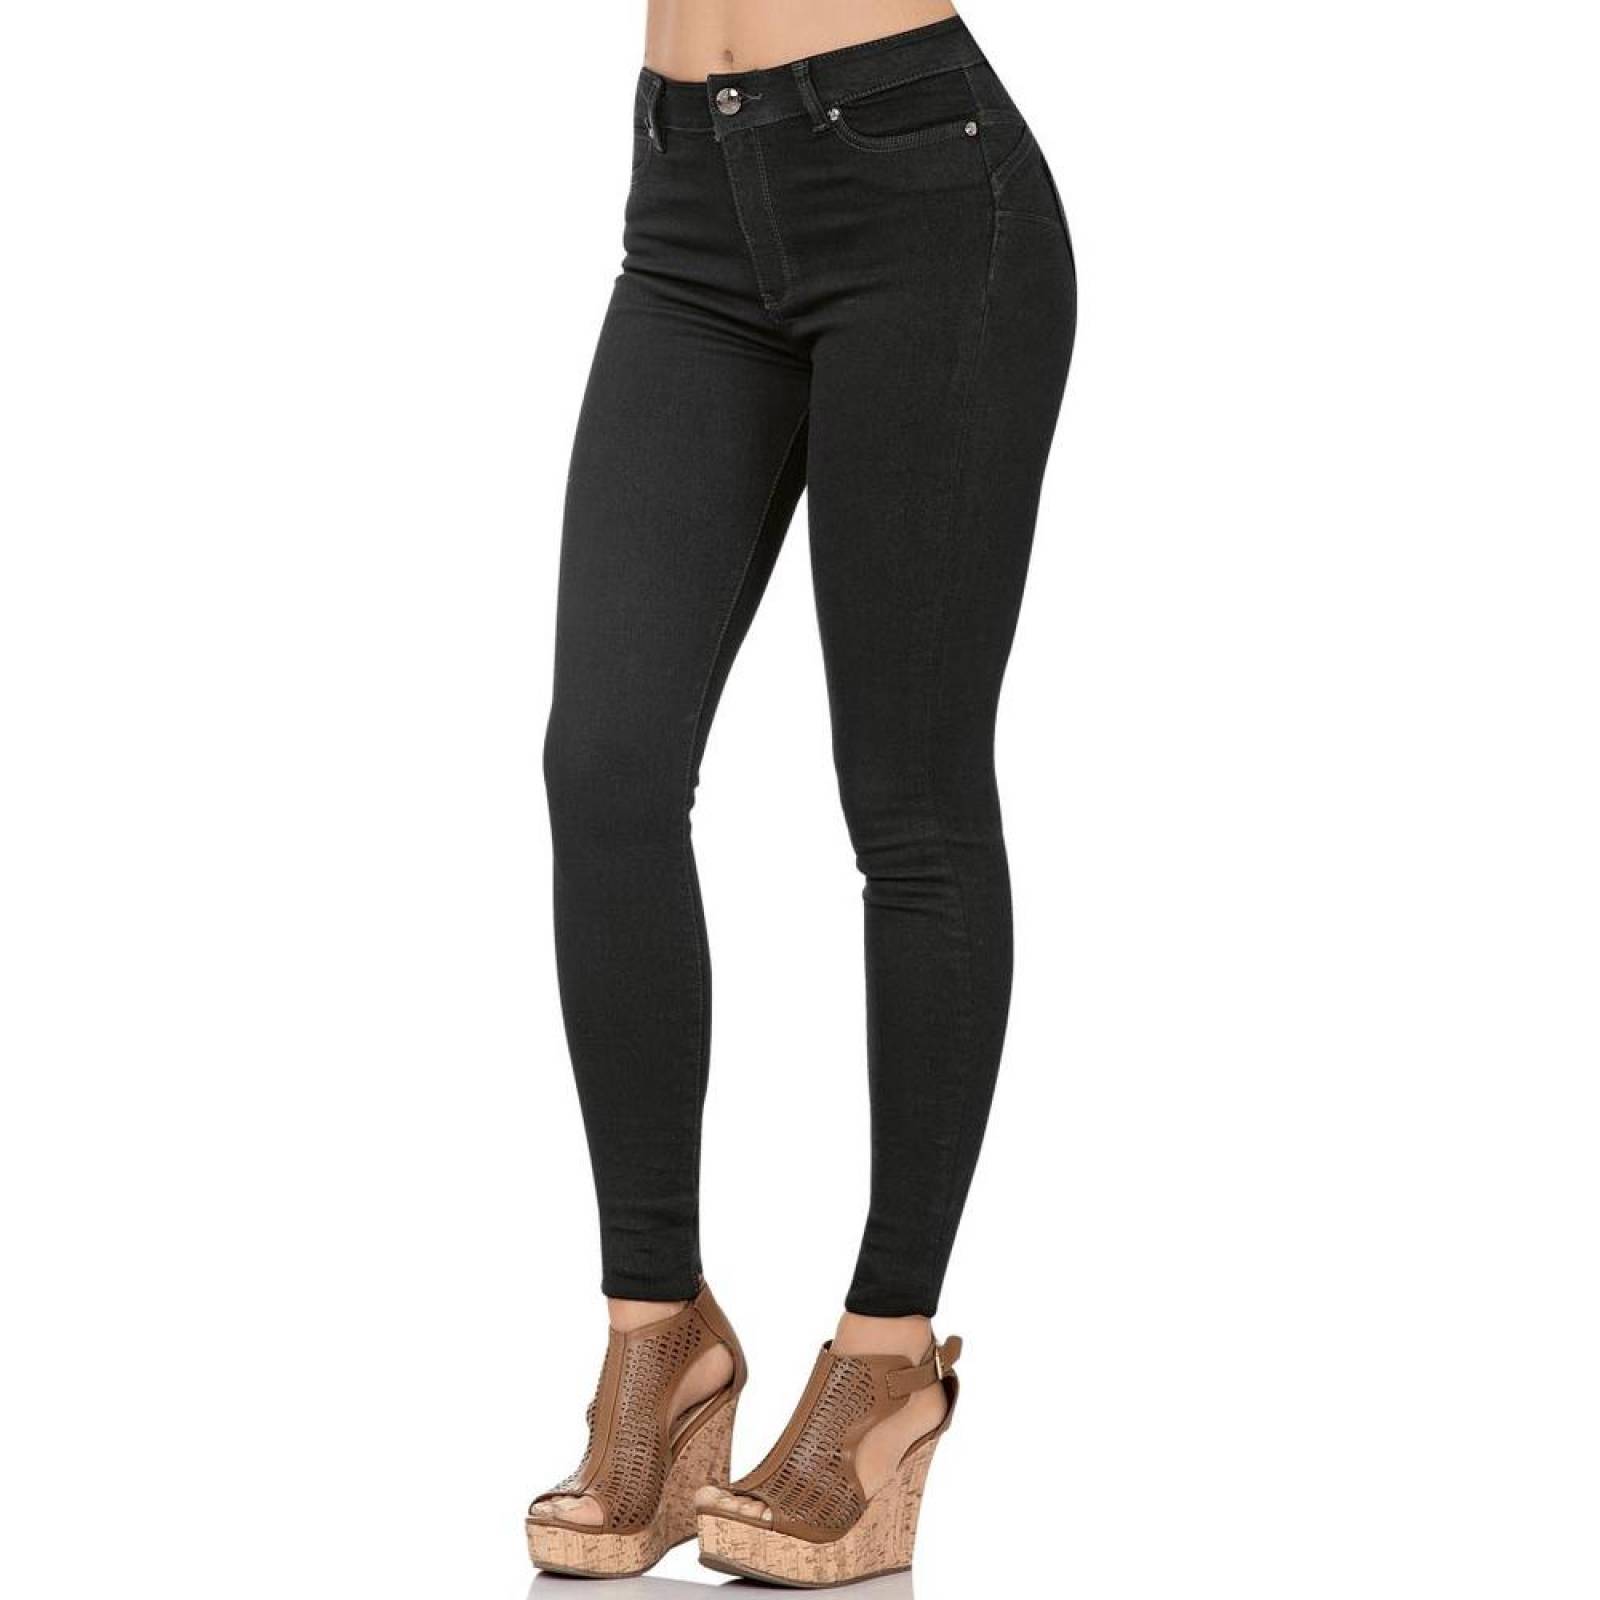 Jeans Básico Mujer Furor Negro 62104008 Mezclilla Stretch 